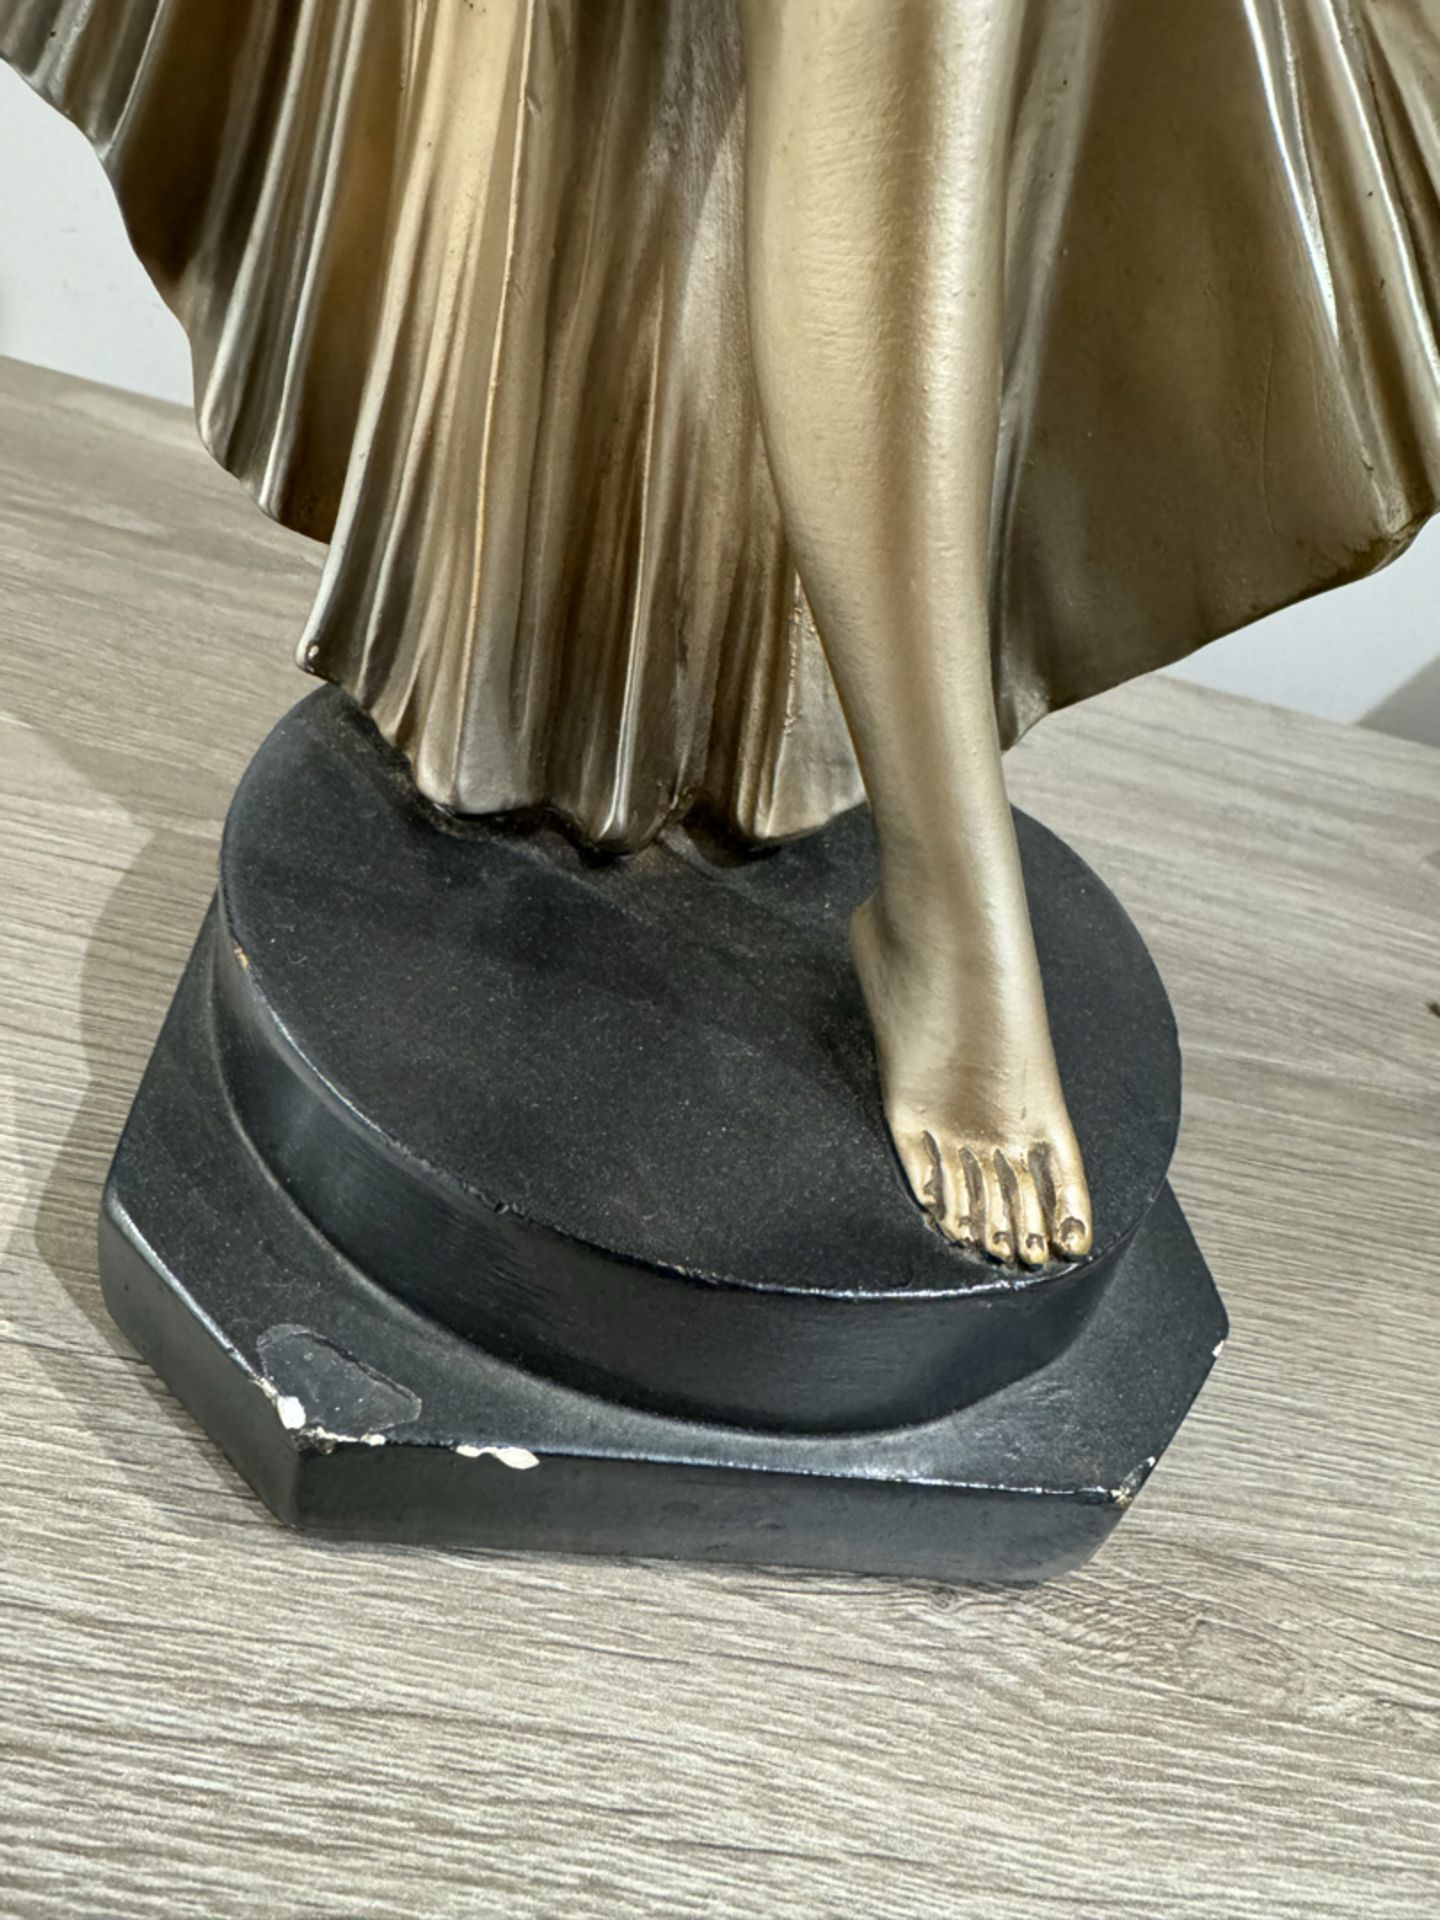 Leonardi 'Rhapsody' Art Deco Figure - Image 5 of 6